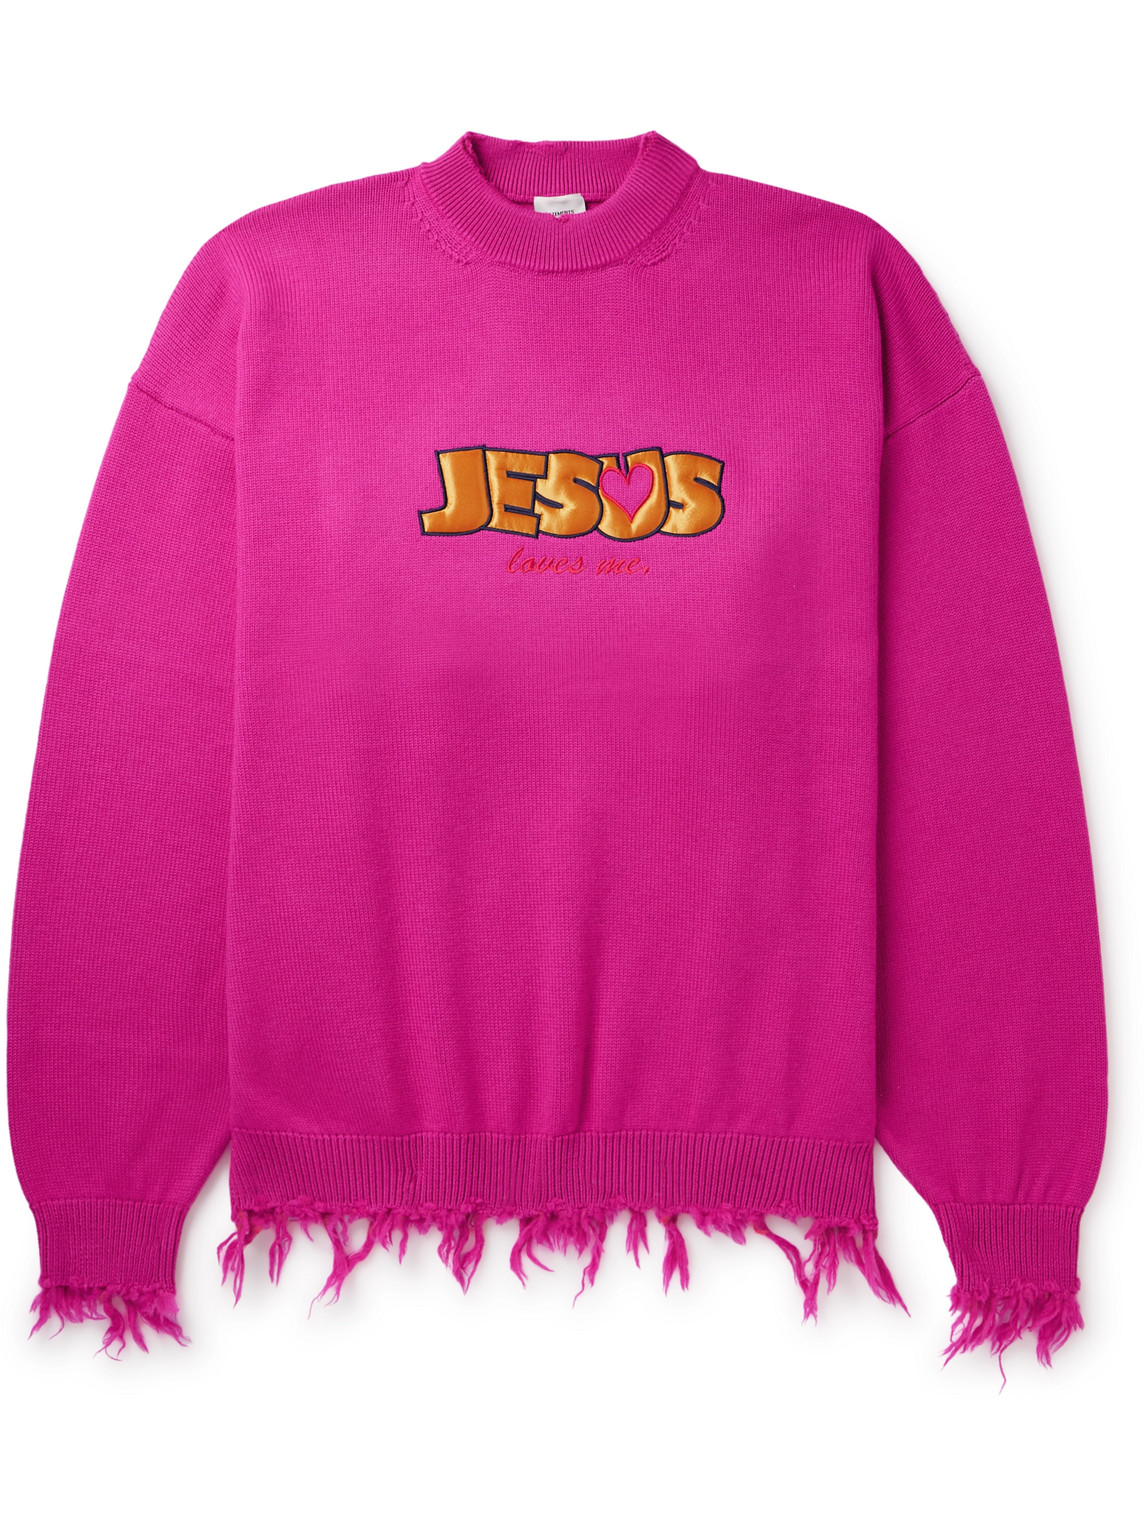 VETEMENTS - Jesus Loves You Distressed Merino Wool Sweater - Men - Pink - M von VETEMENTS